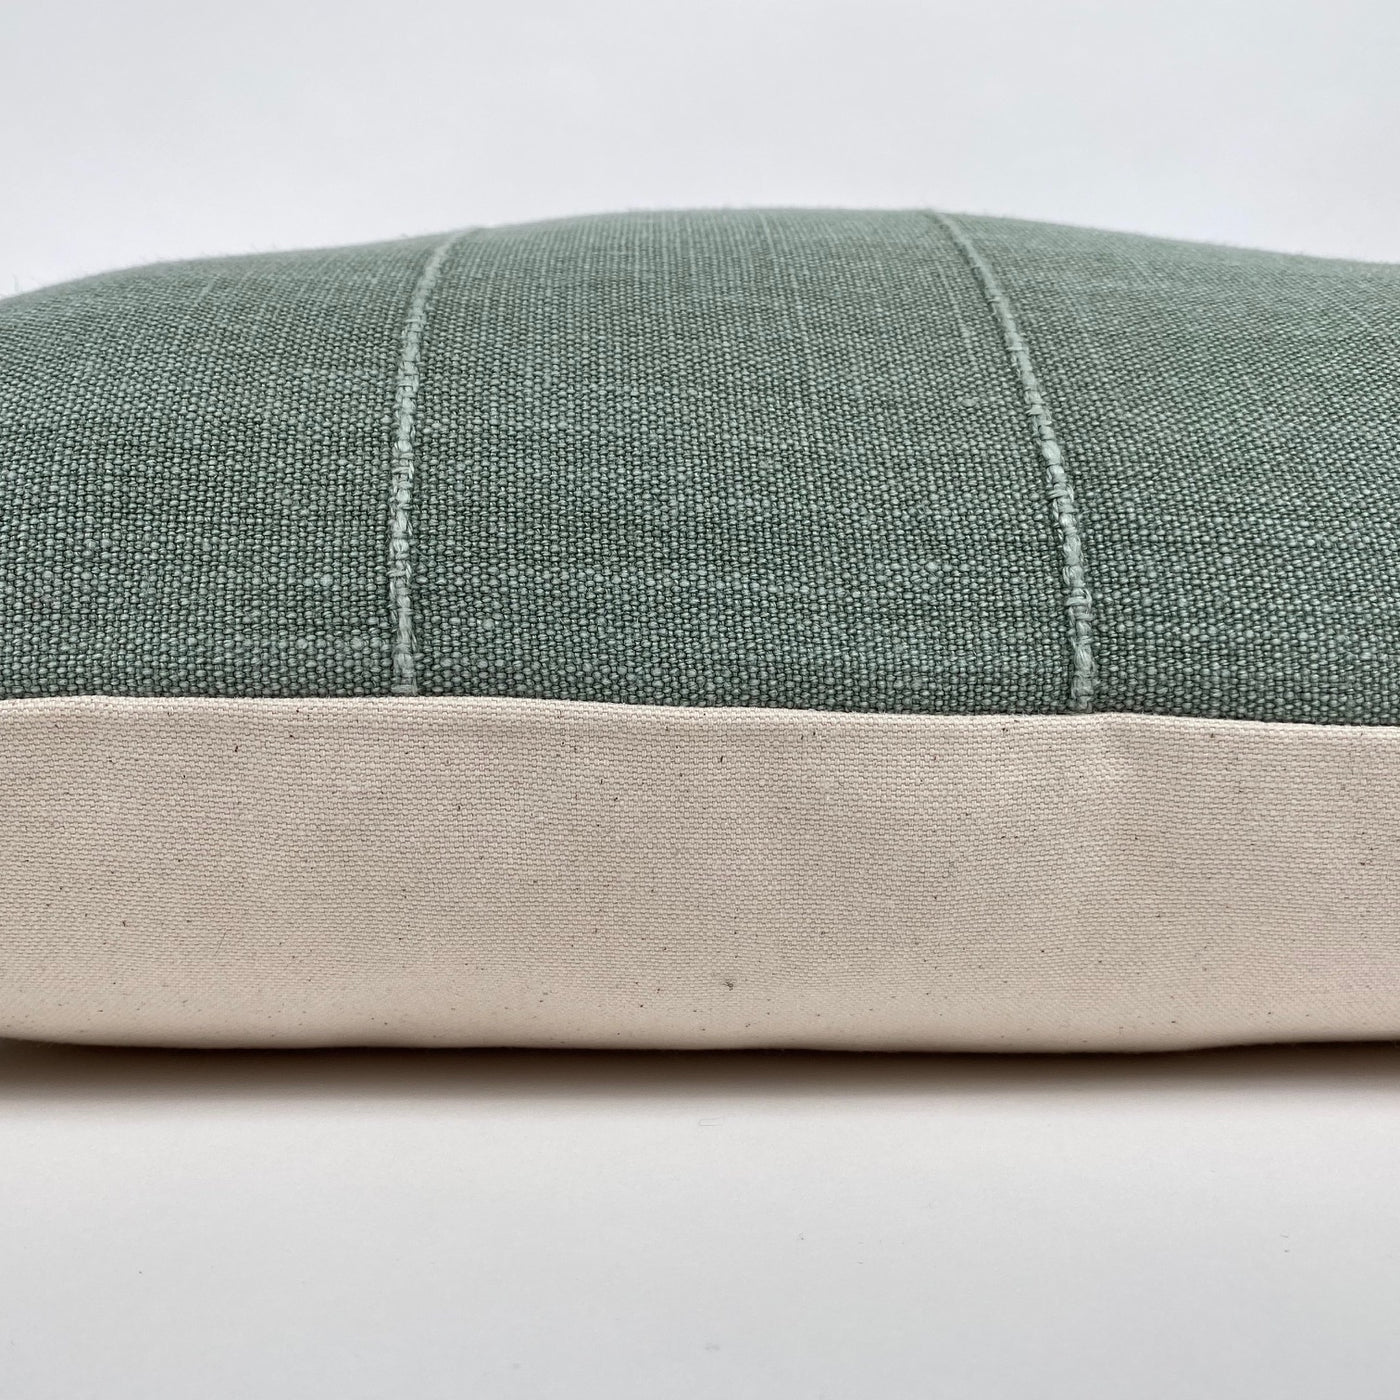 Paramo Sage Green Pillow Cover Throw Pillows by Tatiana Ordoñez